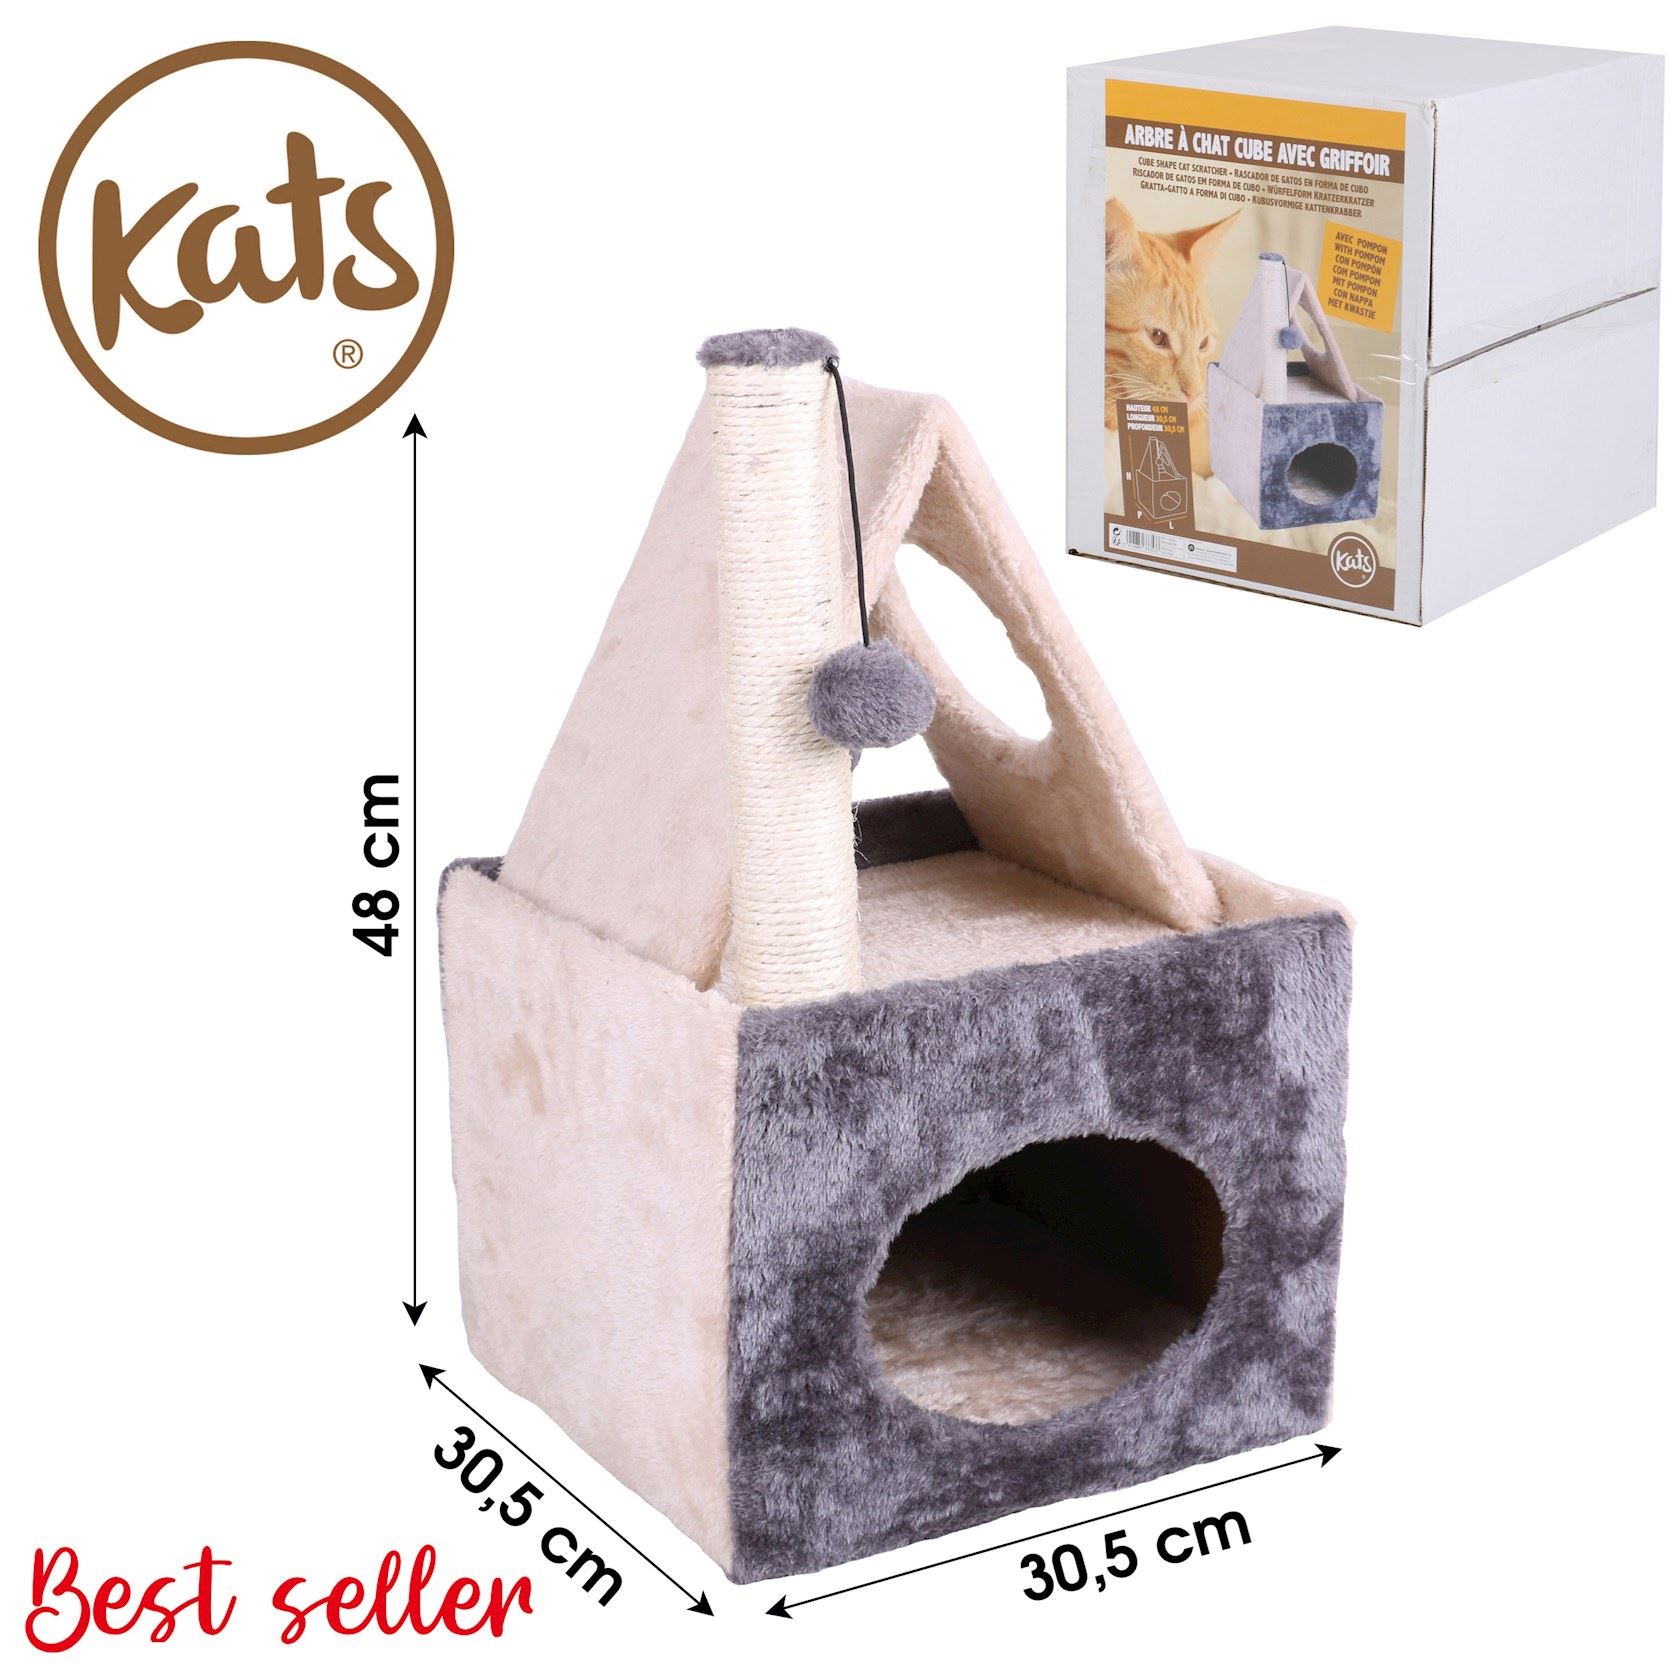 Kats-kattenboom-kubus-30-5xh48cm